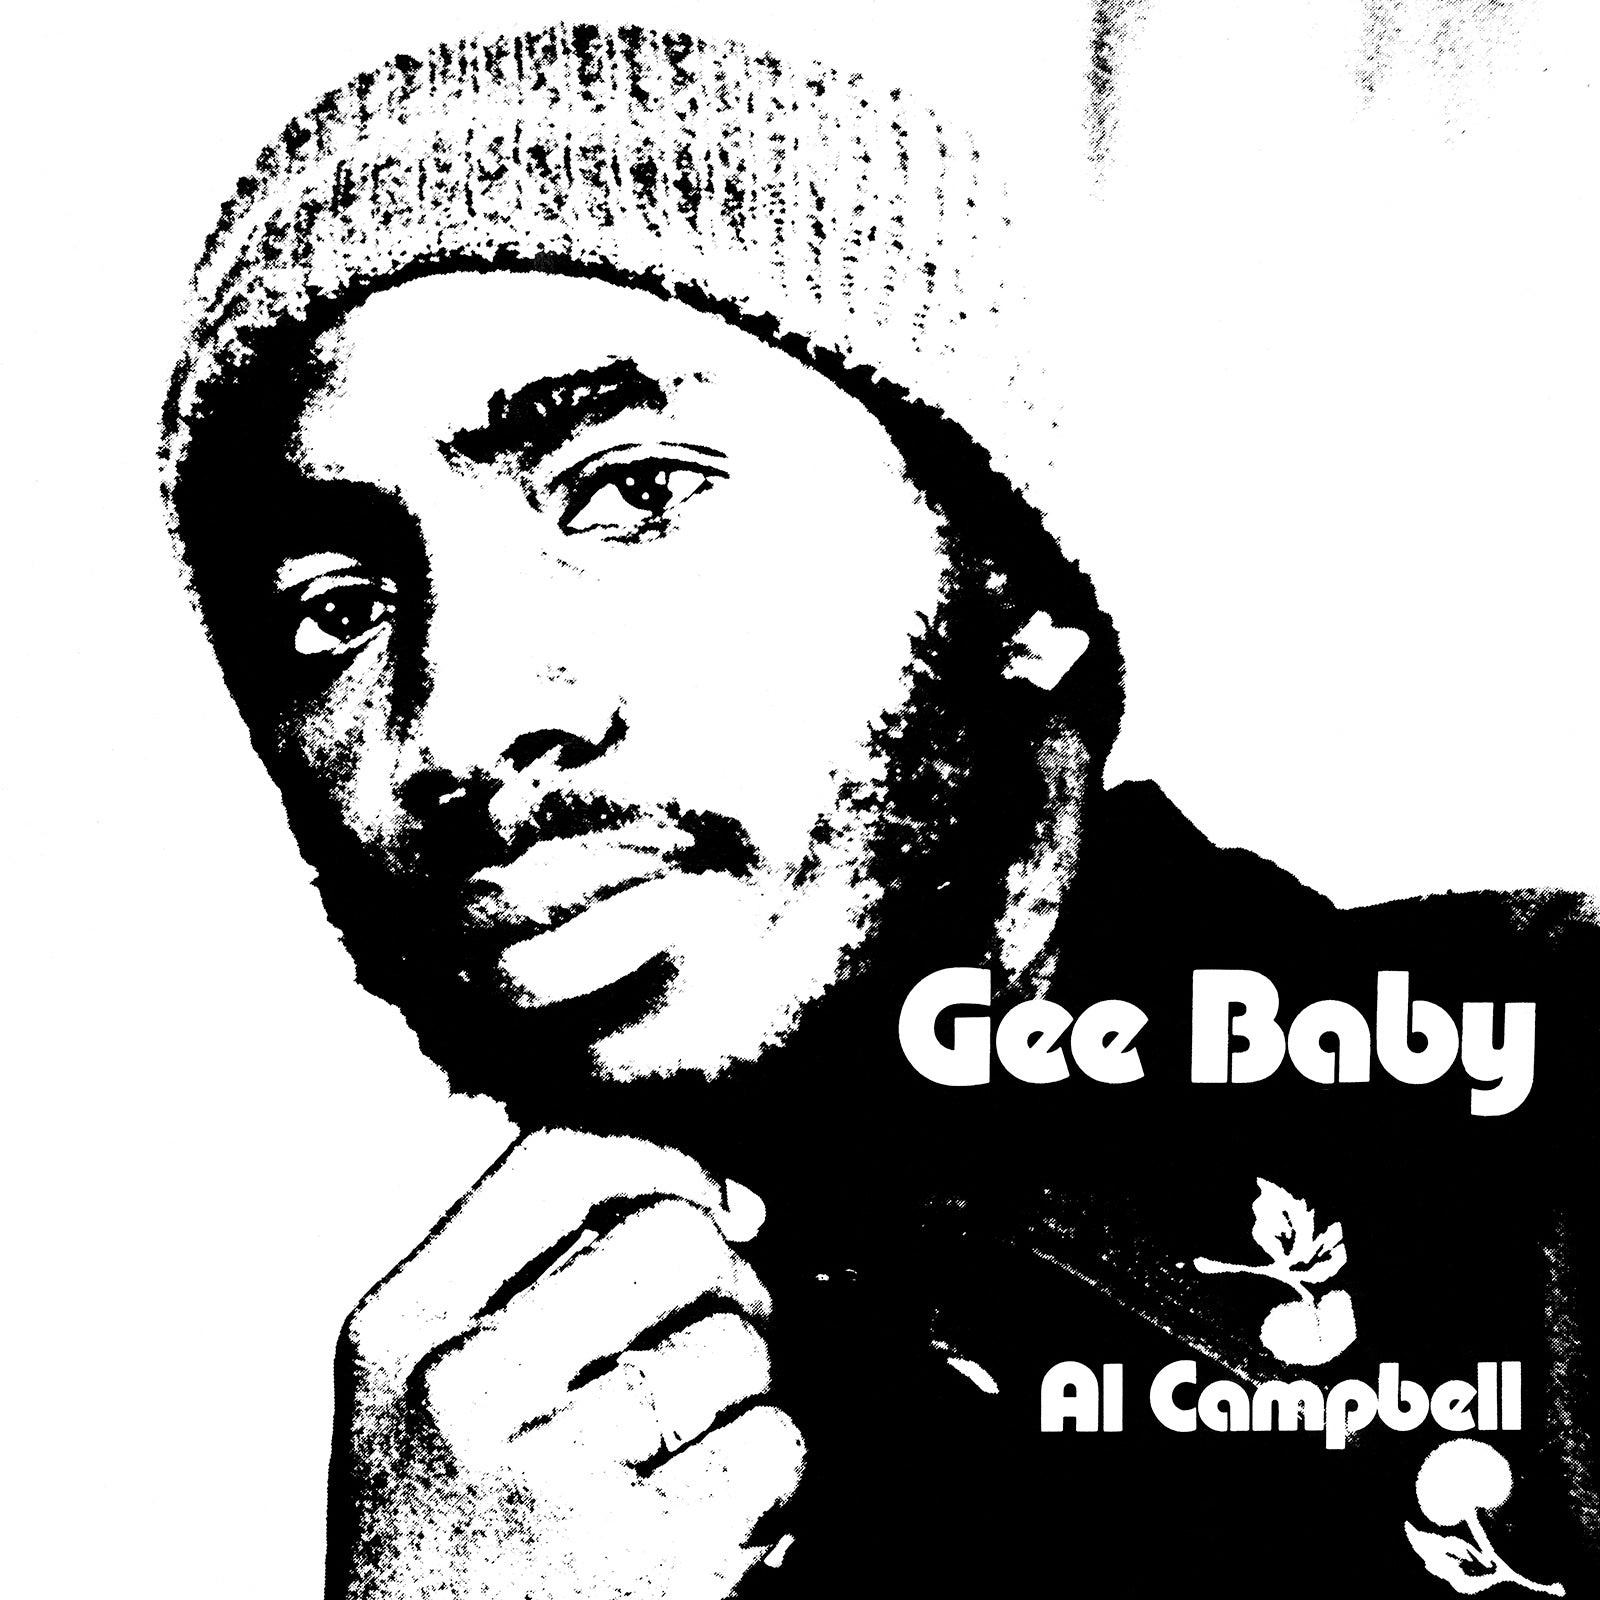 Al Campbell - Gee Baby - Vinyl LP - Secret Records Limited